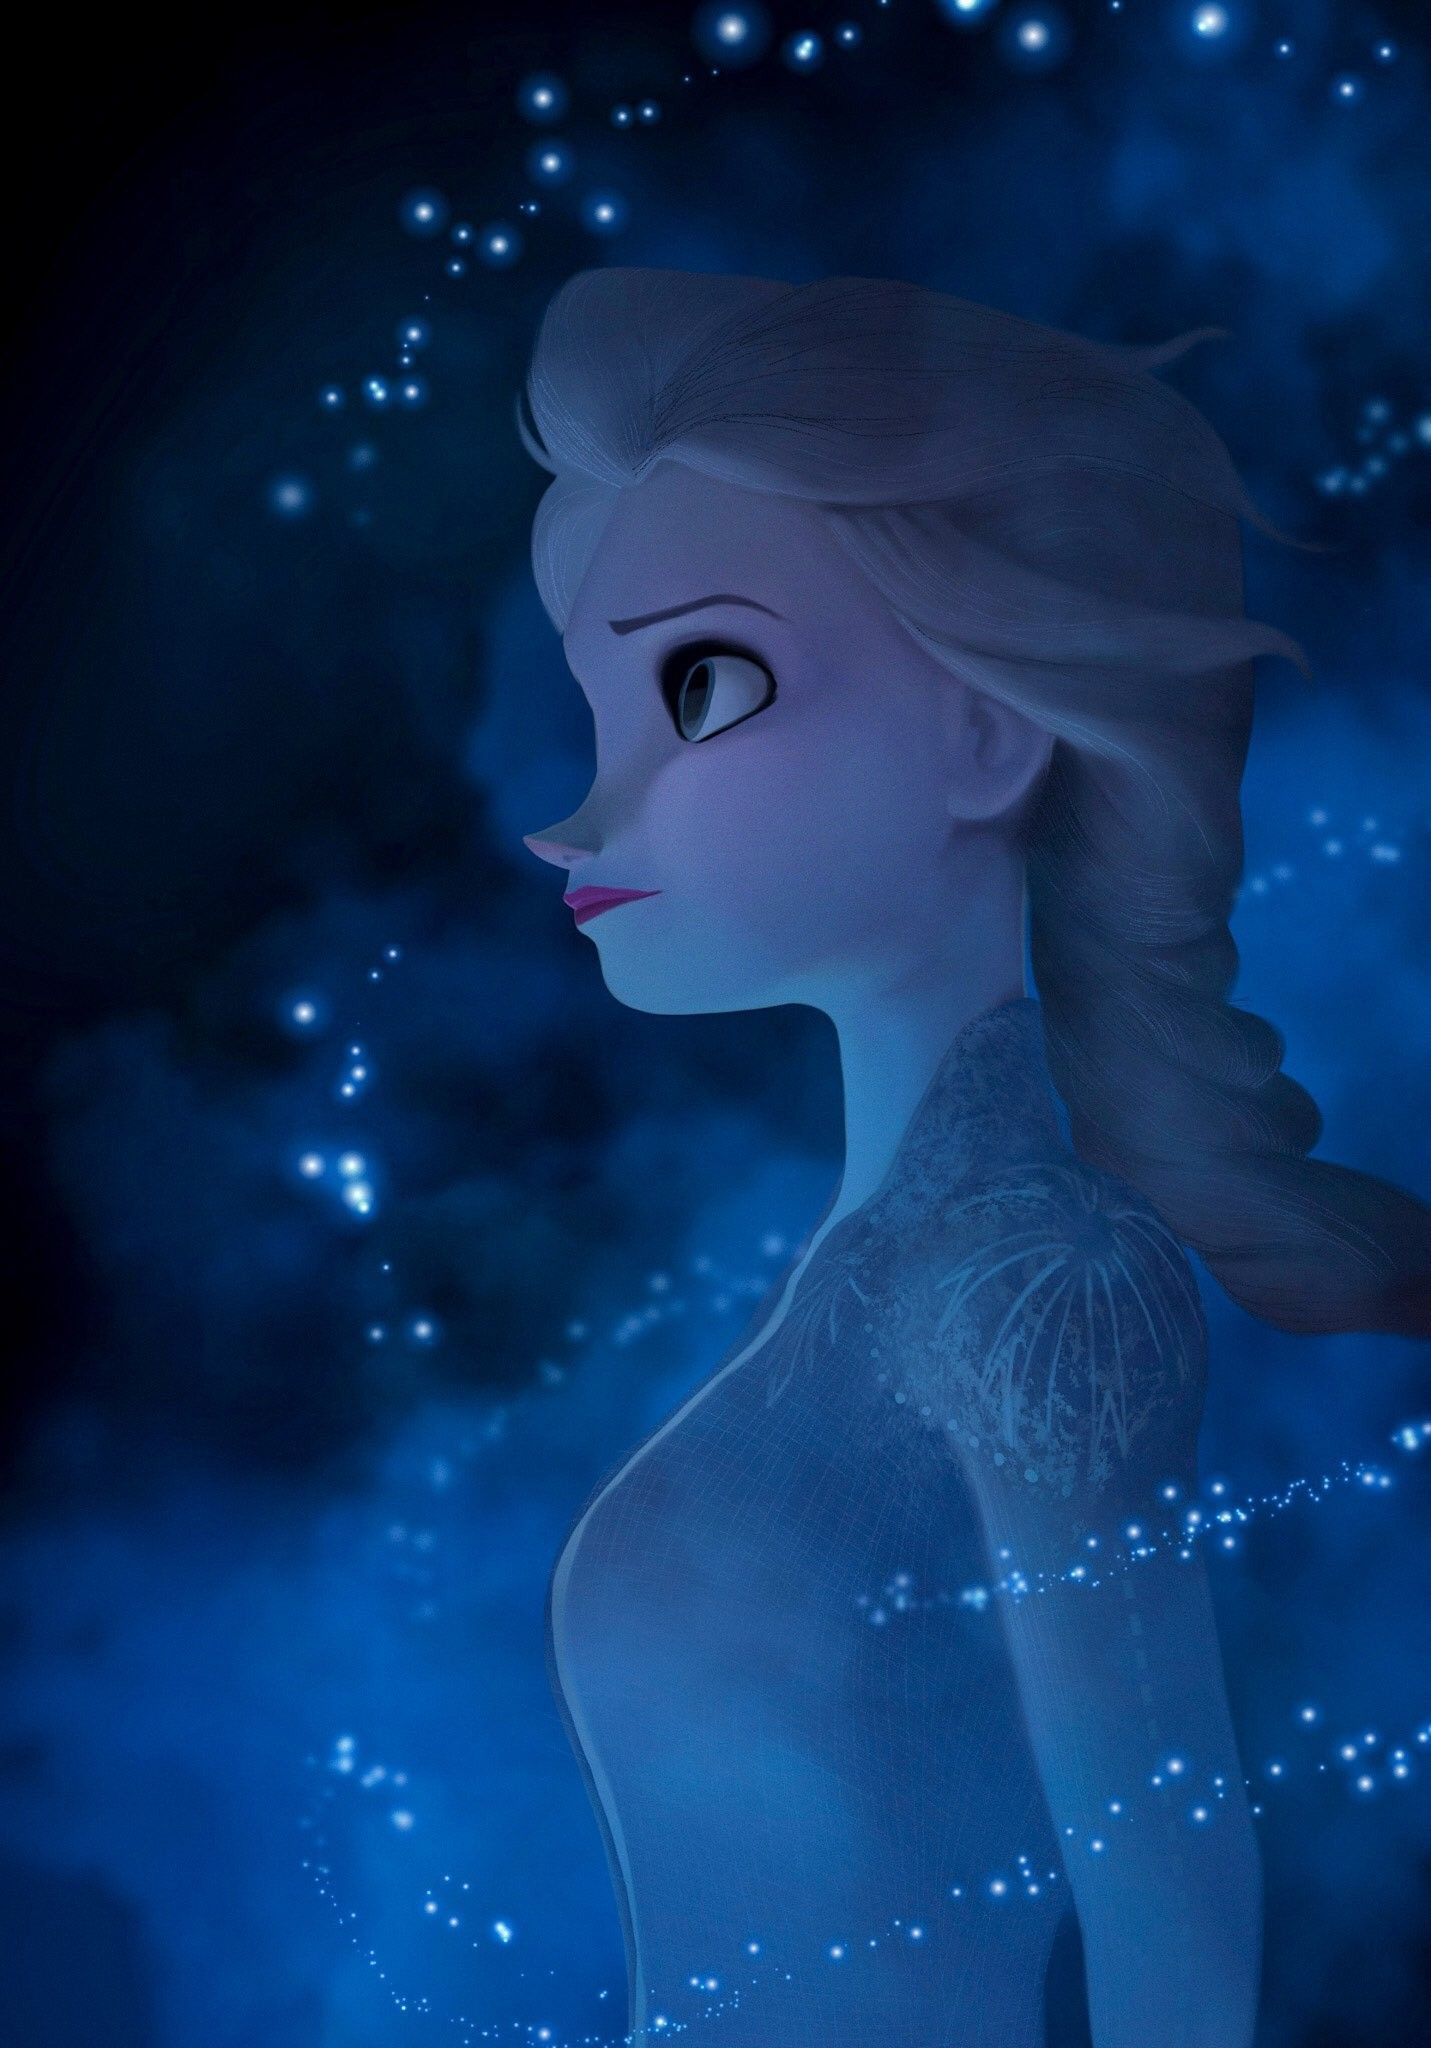 Frozen. Disney princess image, Disney princess picture, Disney princess elsa